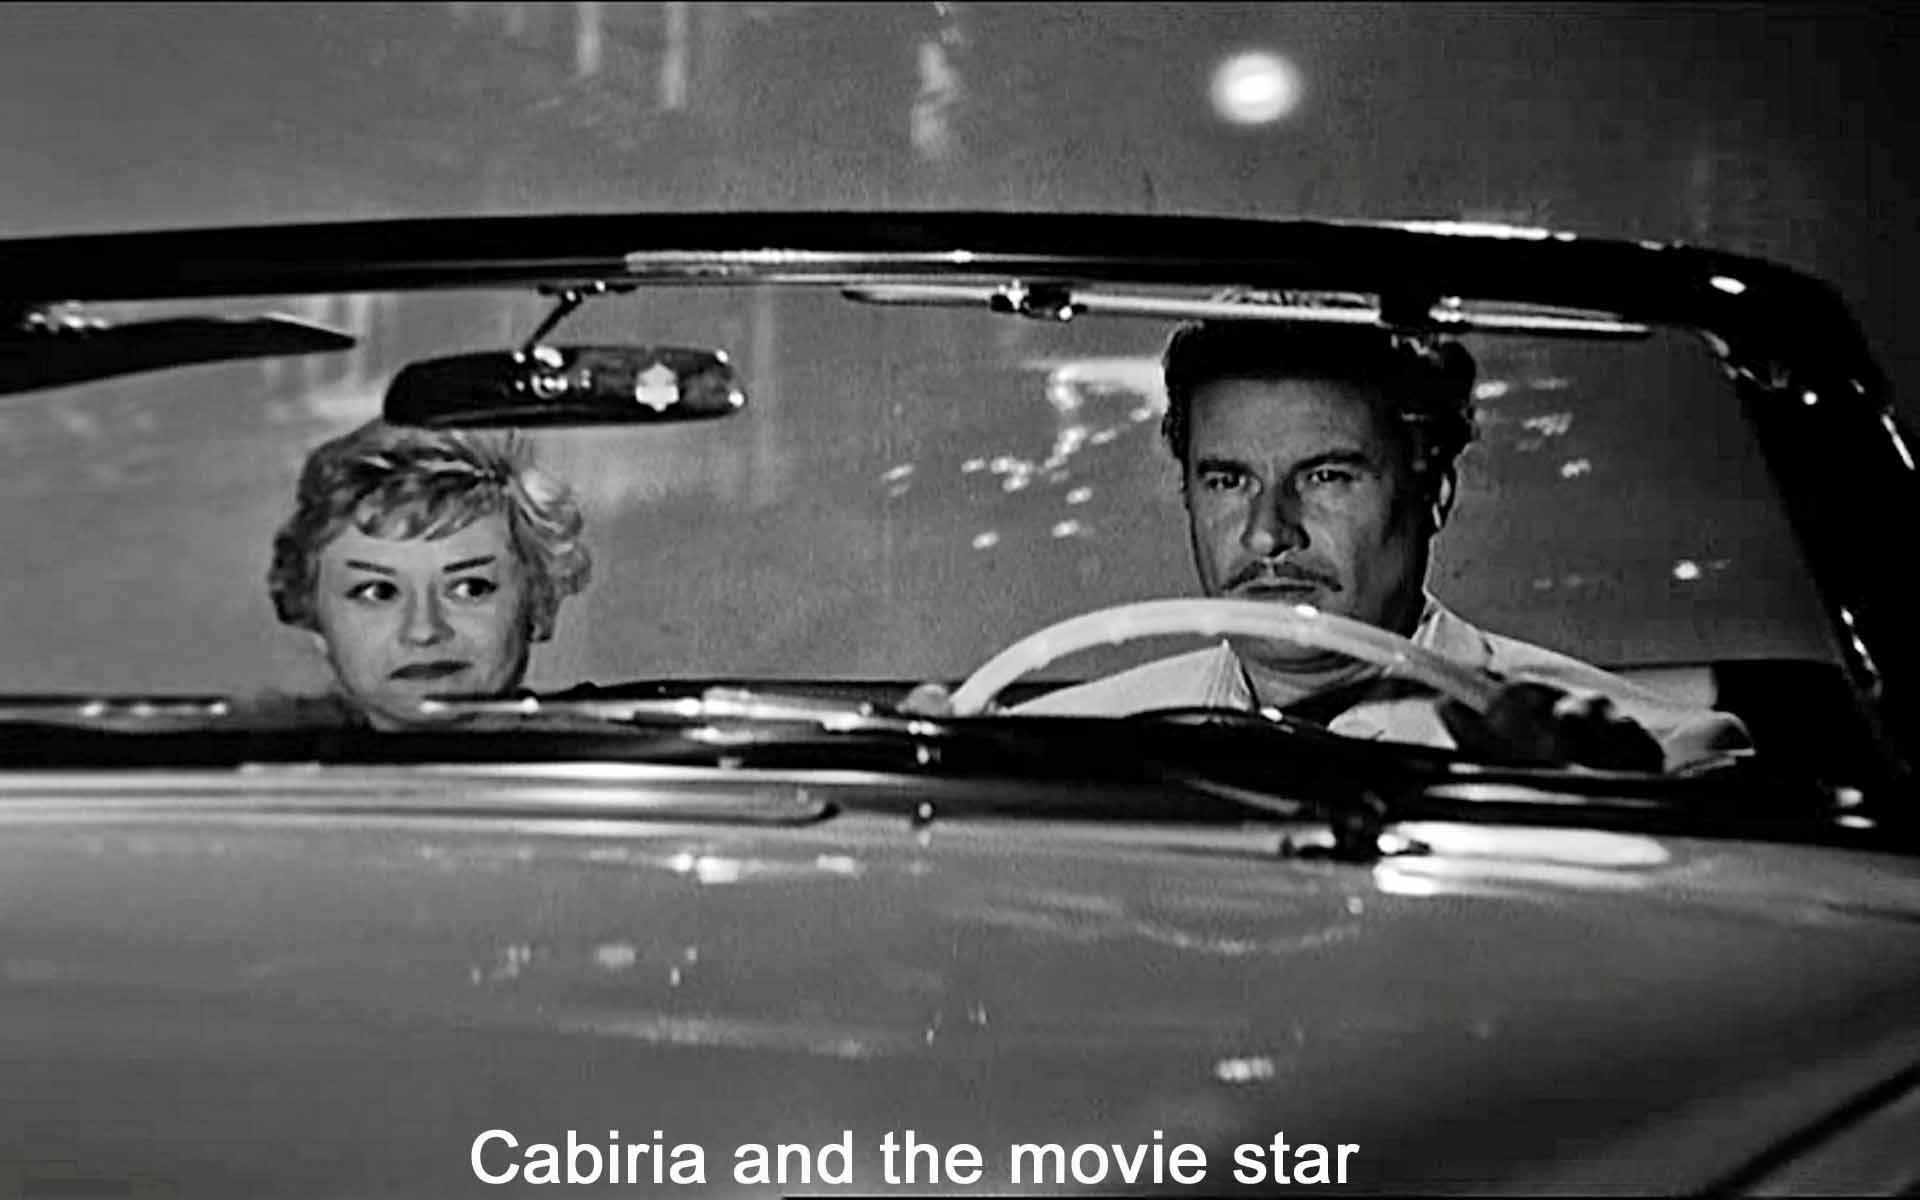 Cabiria and the movie star